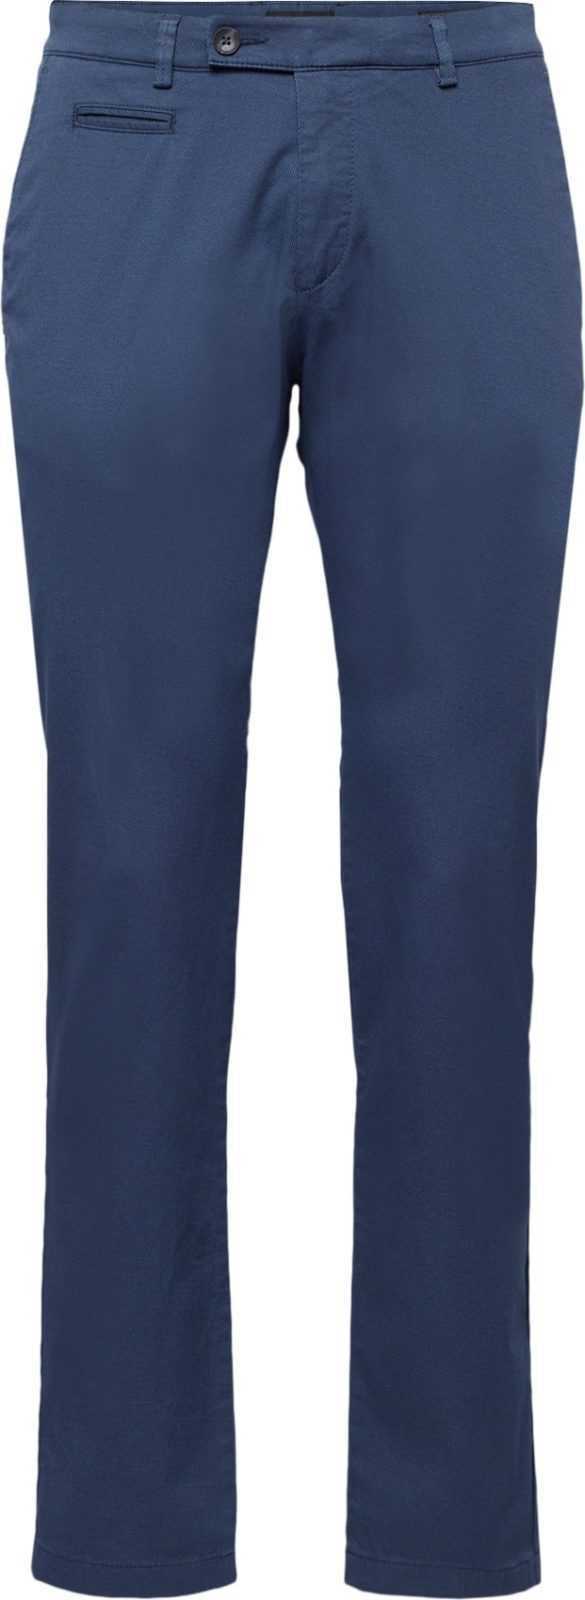 bugatti Chino kalhoty marine modrá